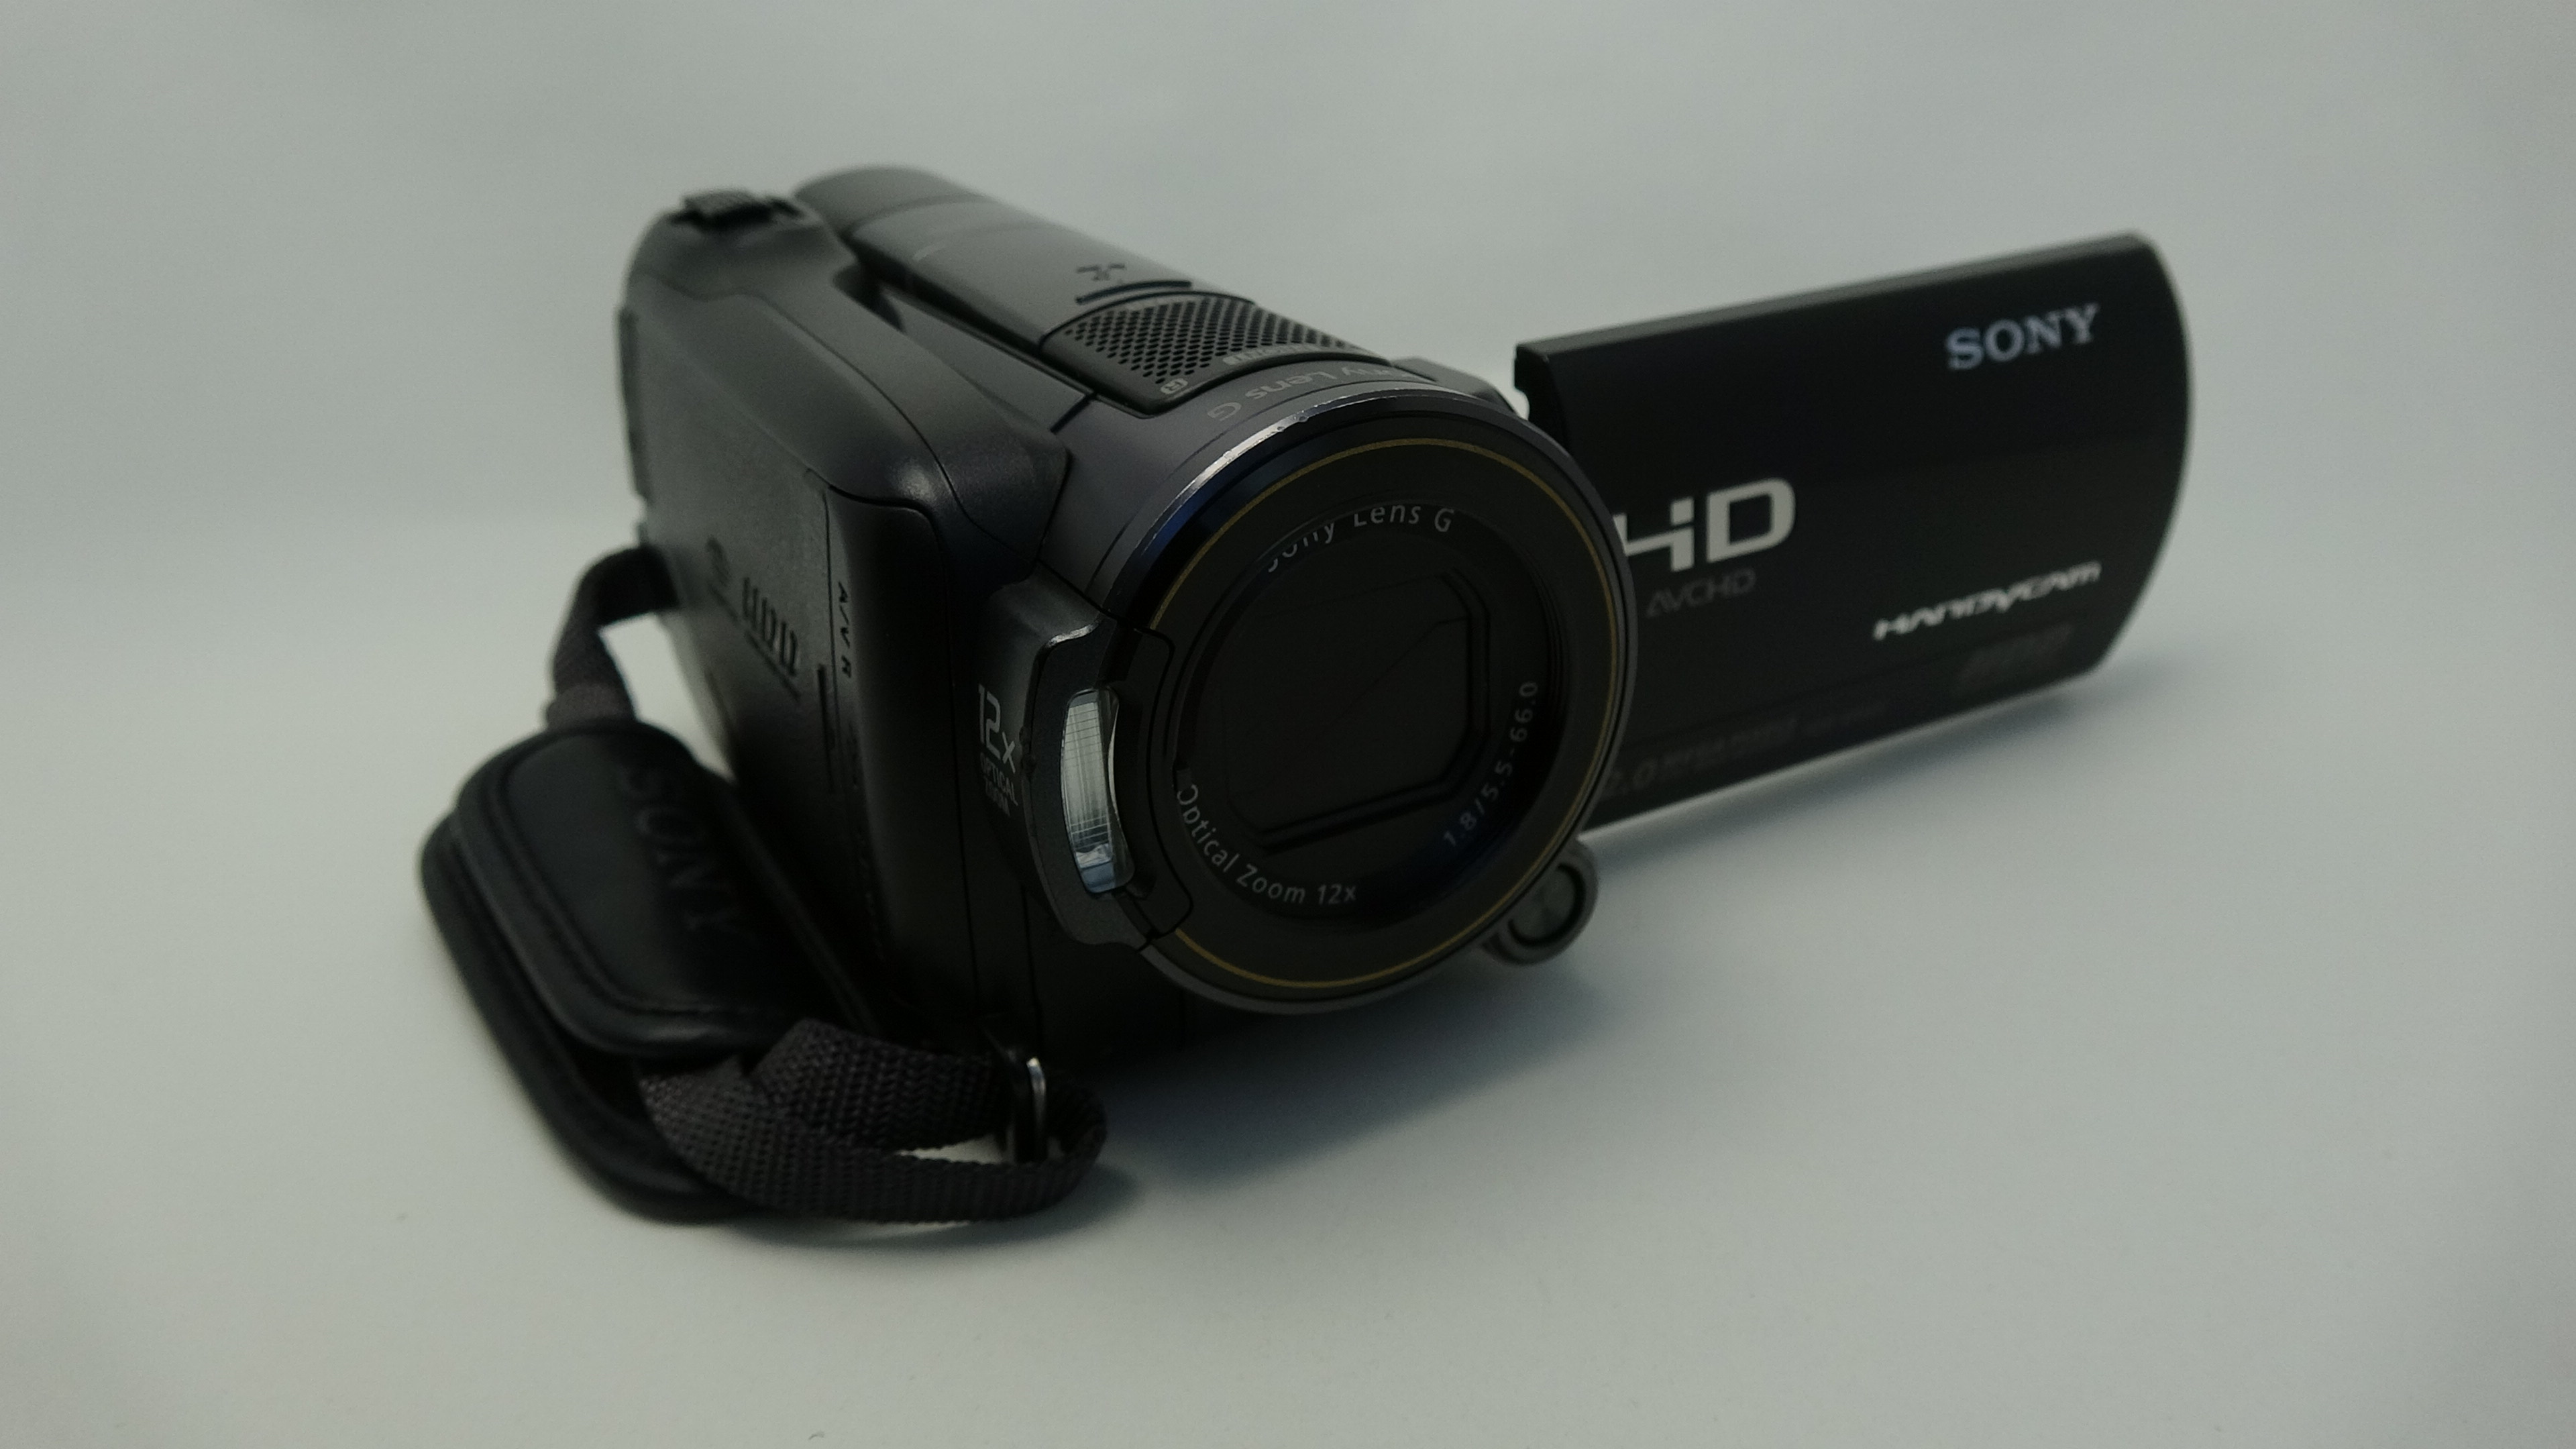 HDR-XR520-handycam E:31:00フォーマットエラー表示